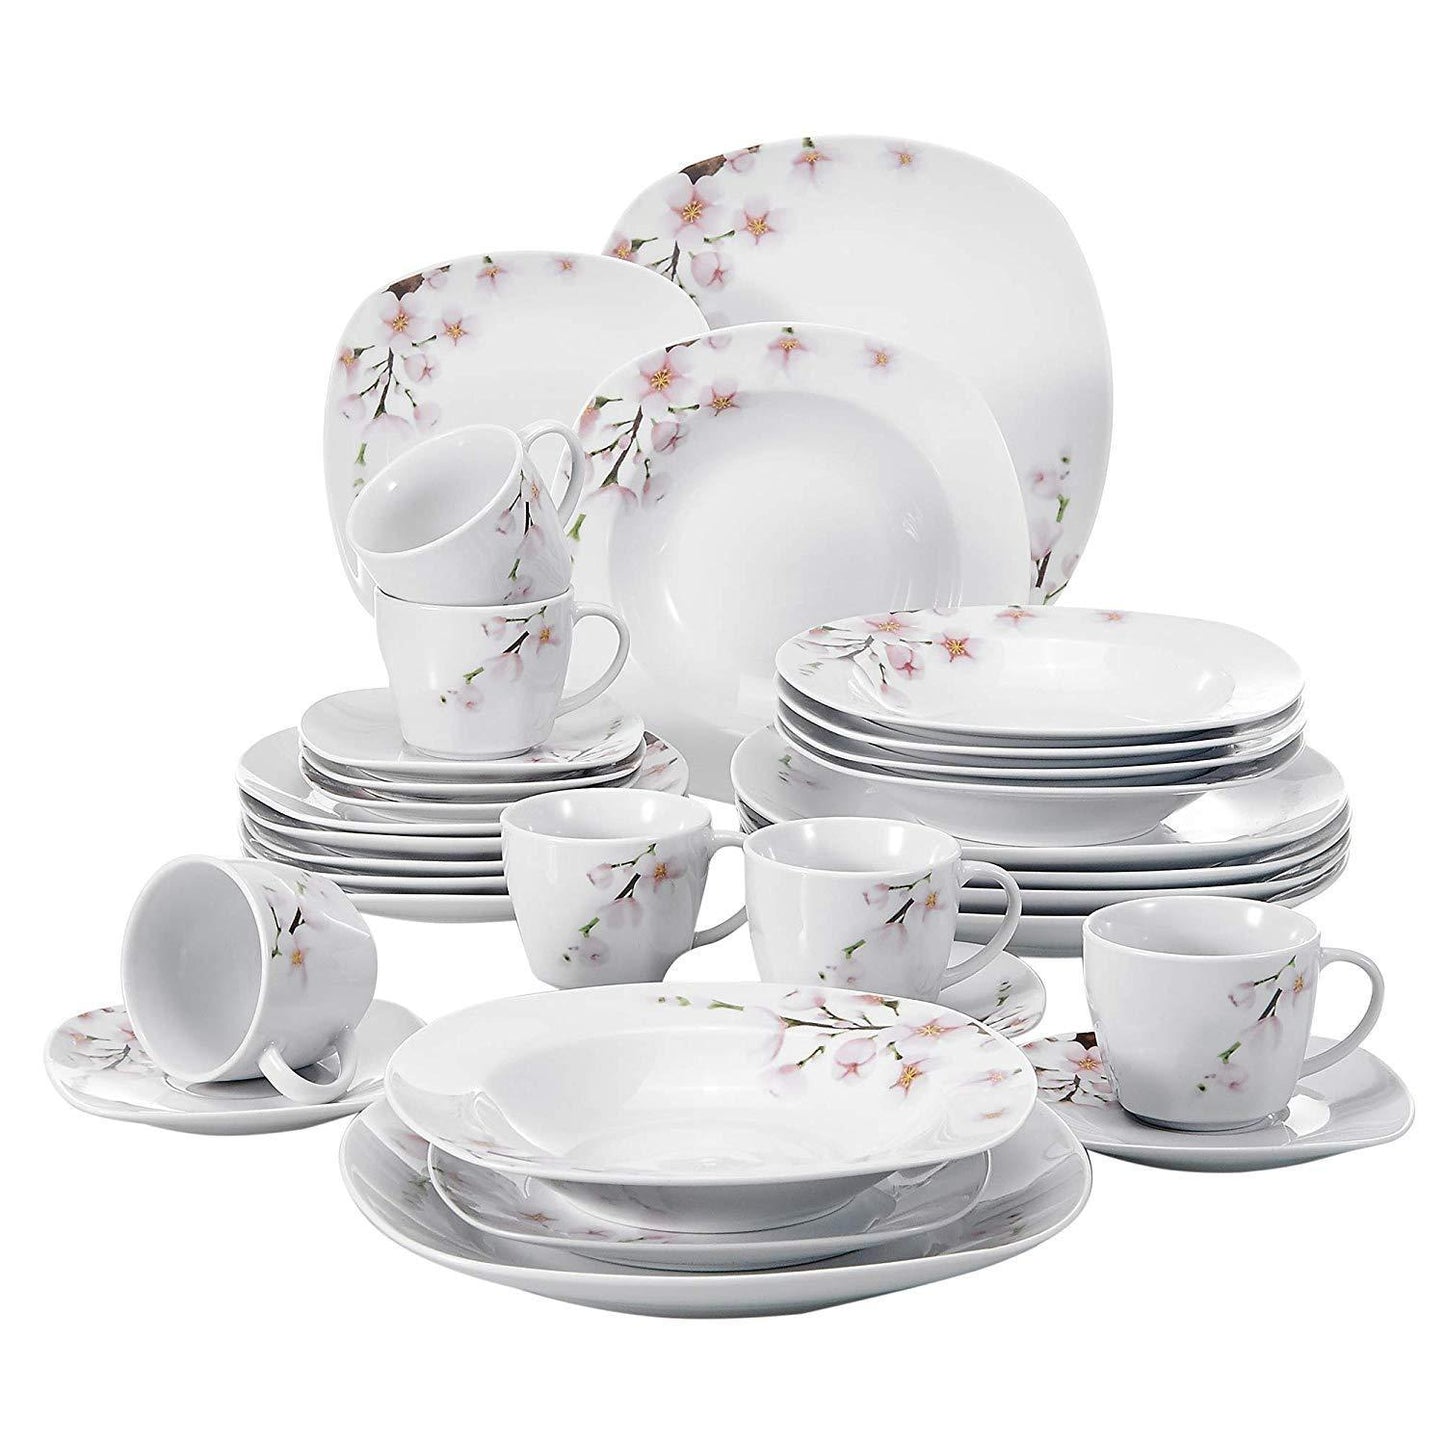 ANNIE 30-Piece White Ceramic Pink Floral Porcelain Dinner Set - Nordic Side - 30, and, ANNIE, Ceramic, Dinner, Floral, Piece, Pink, Plate, PlateCups, PlateDessert, PlateSoup, Porcelain, Sauce